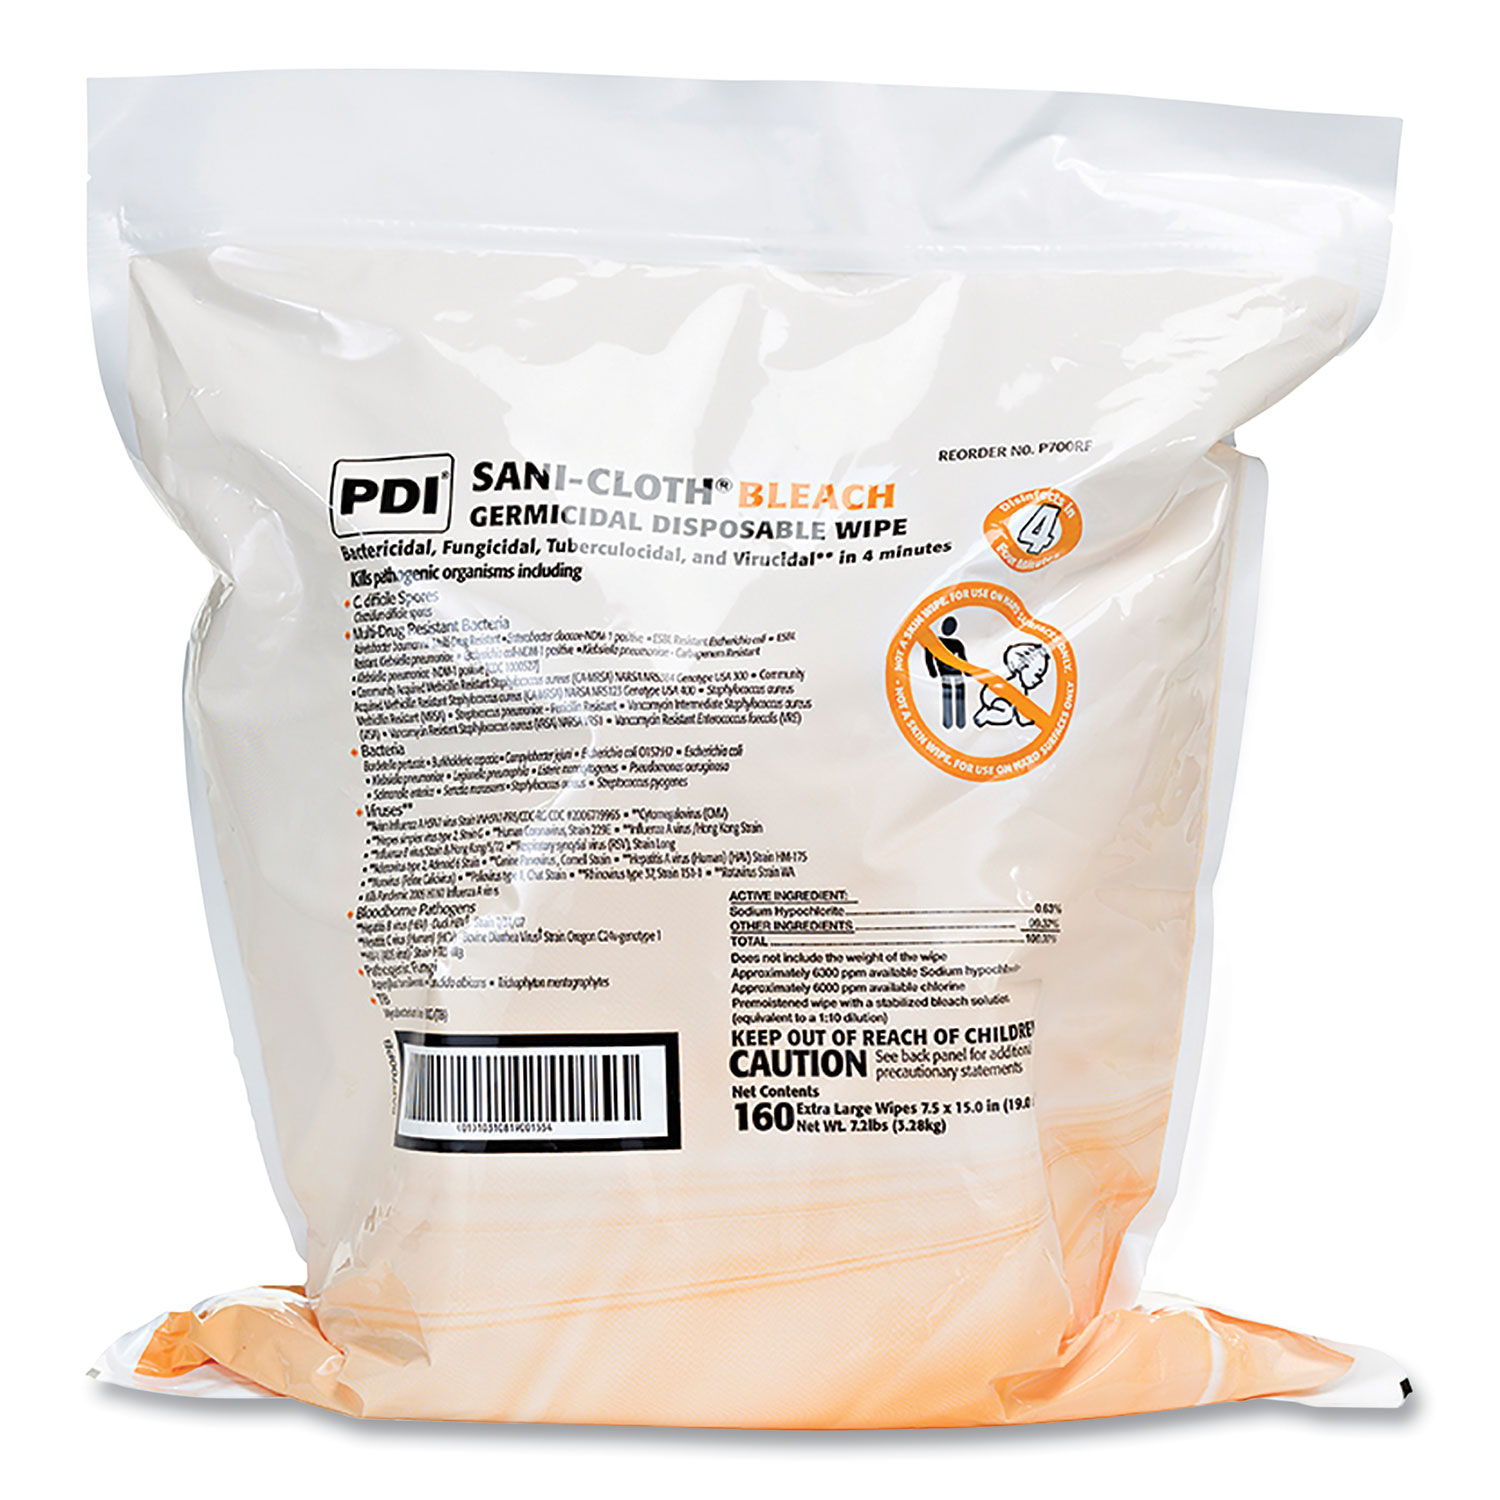 Sani-Cloth Bleach Germicidal Disposable Wipe Refill 1-Ply, 7.5 x 15, Unscented, White, 160/Bag, 2 Bags/Carton